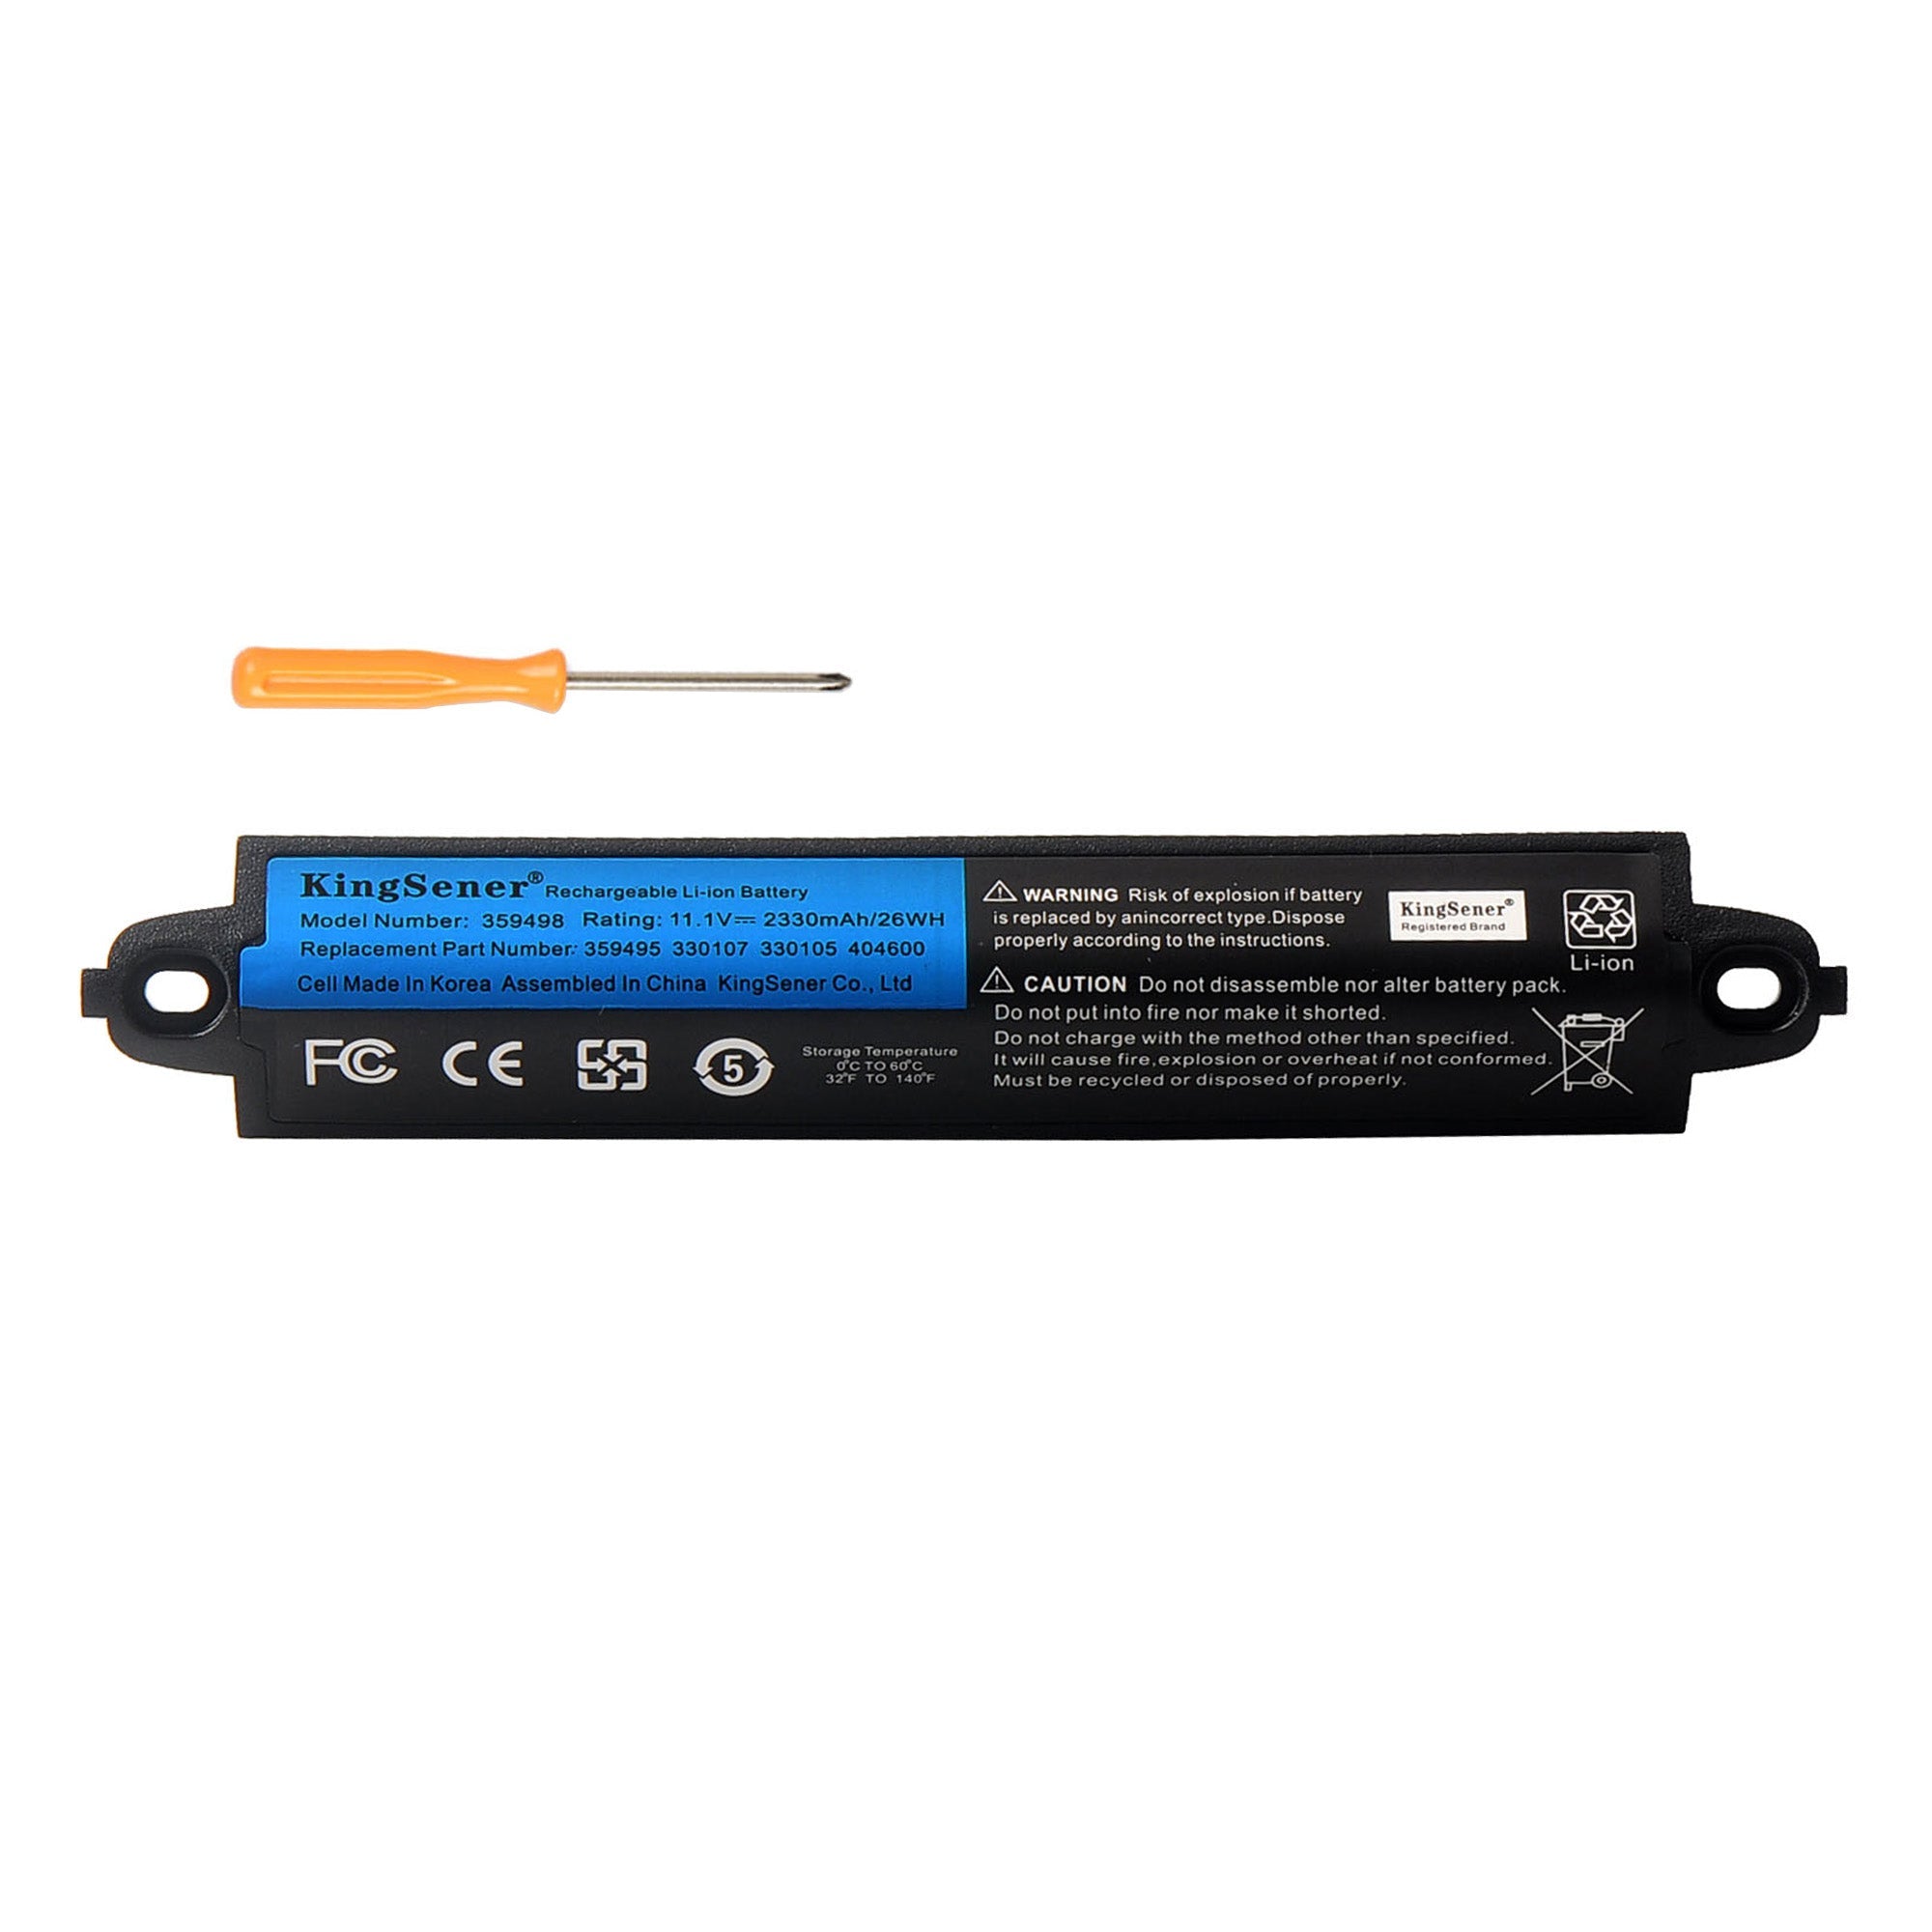 KingSener 359498 11.1V 26WH battery For Bose SoundLink mini 